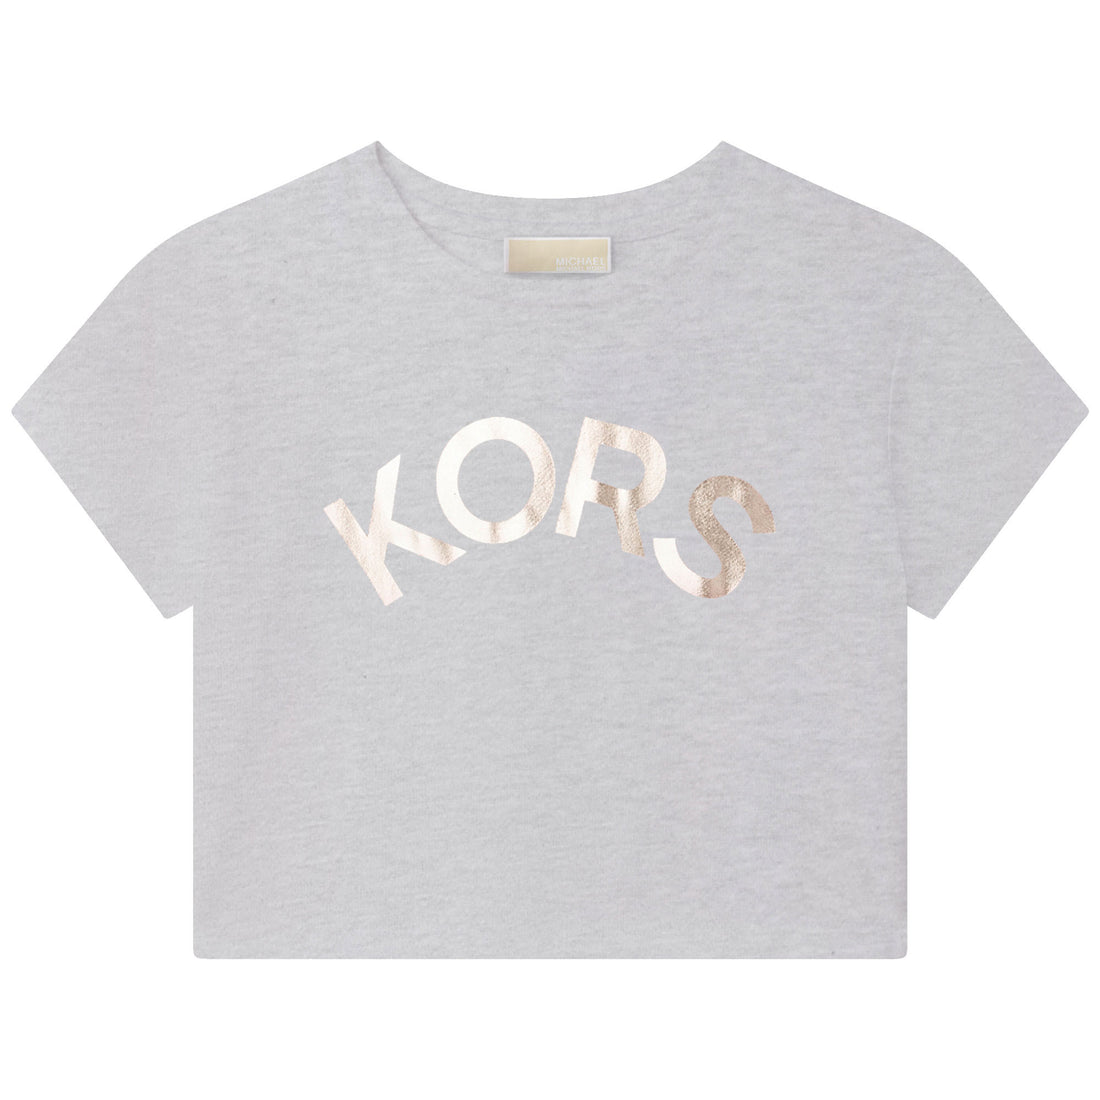 Michael Kors Short Sleeves Tee-Shirt Style: R15163